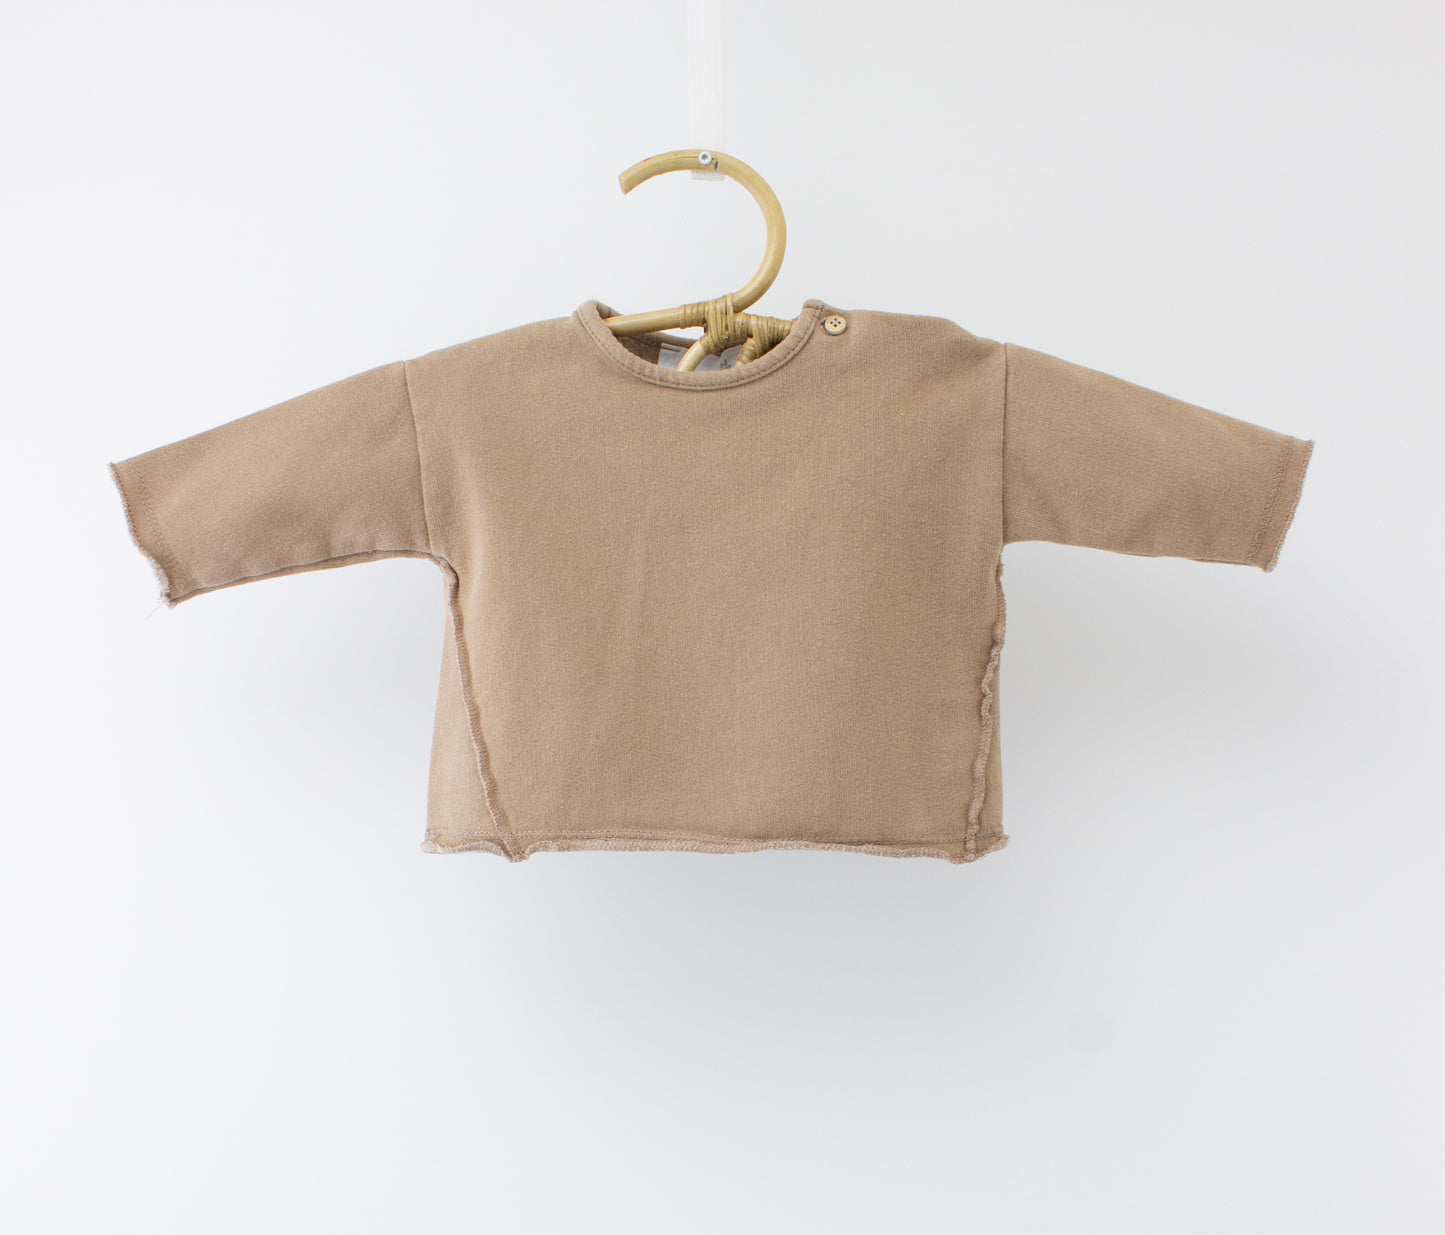 Zara - Sweater